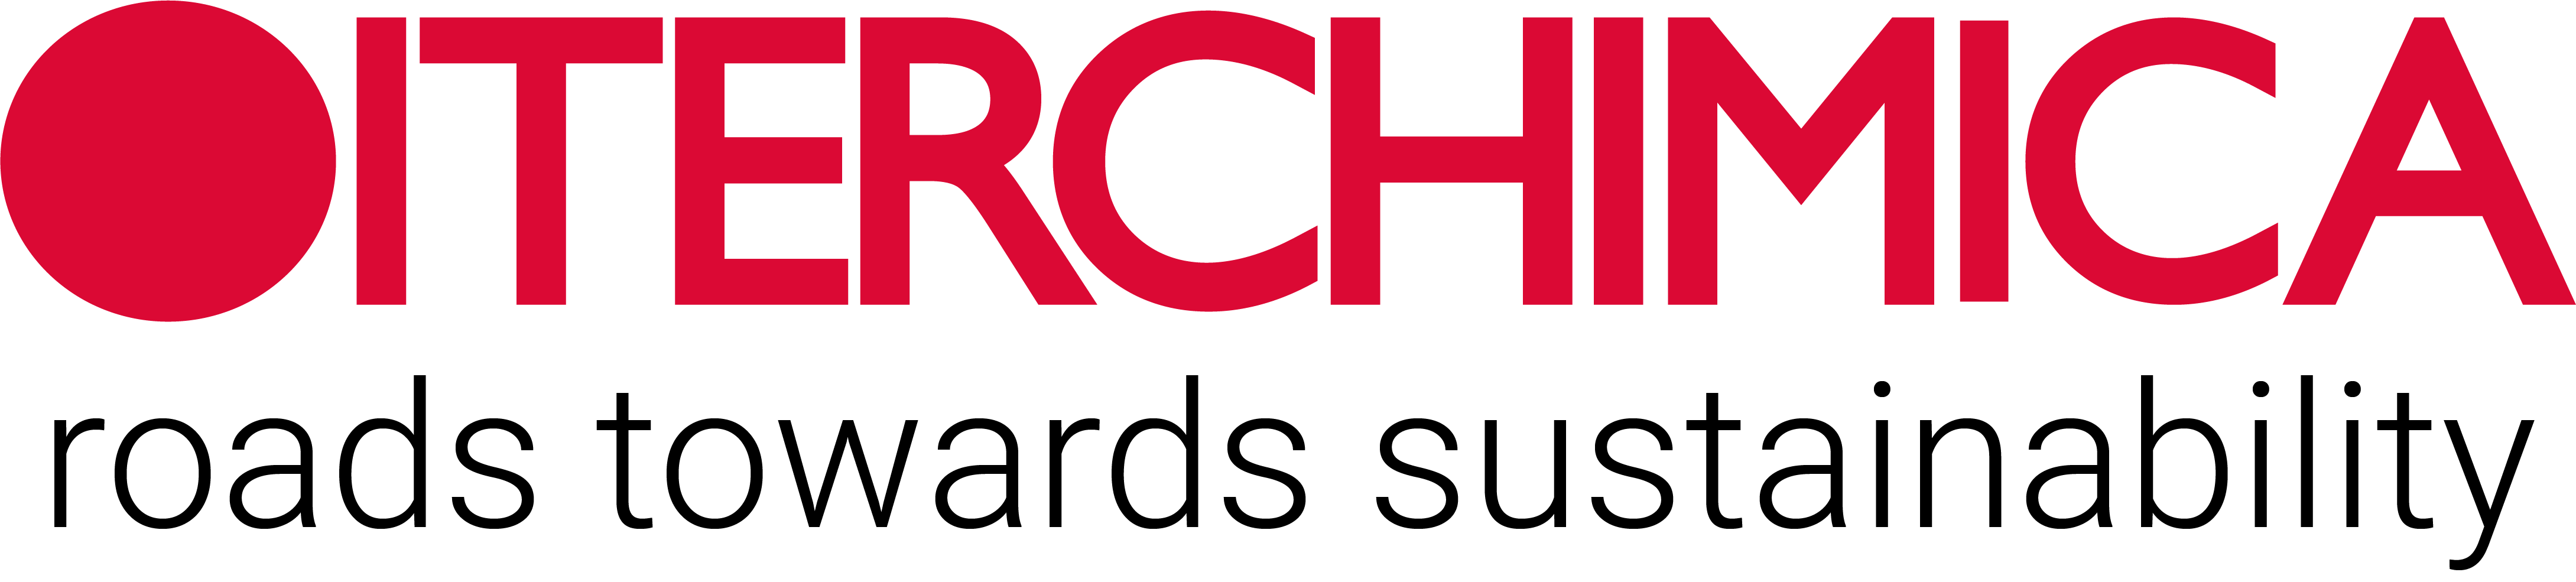 logo iterchimica